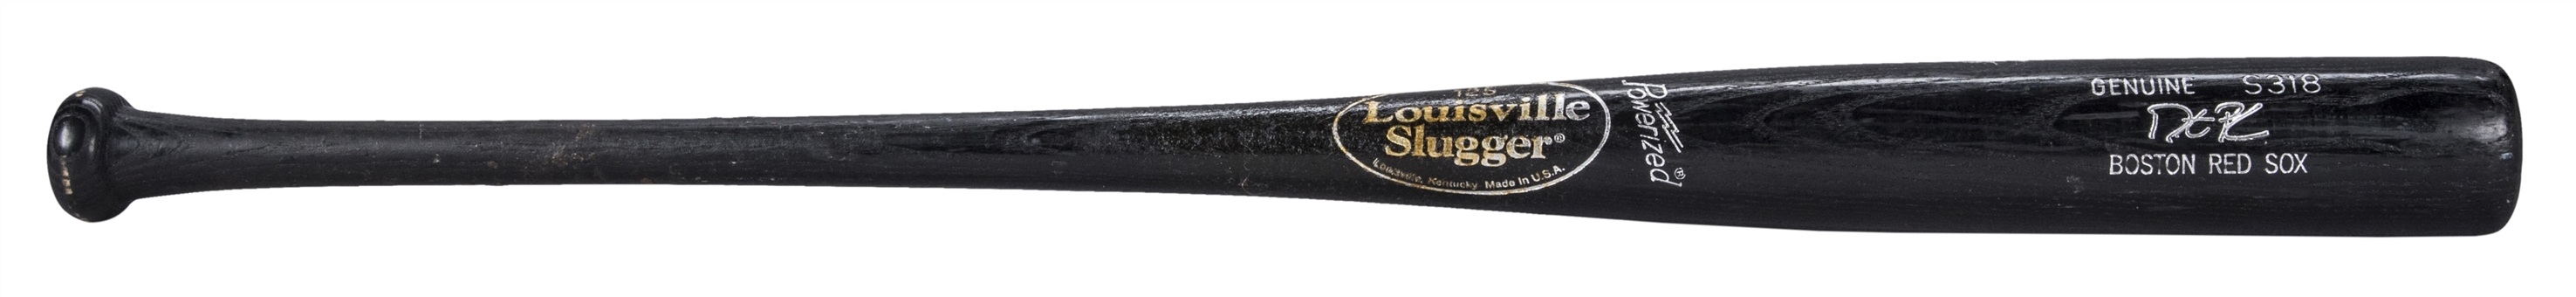 2009 Dustin Pedroia Game Used Louisville Slugger S318 Model Bat (PSA/DNA)